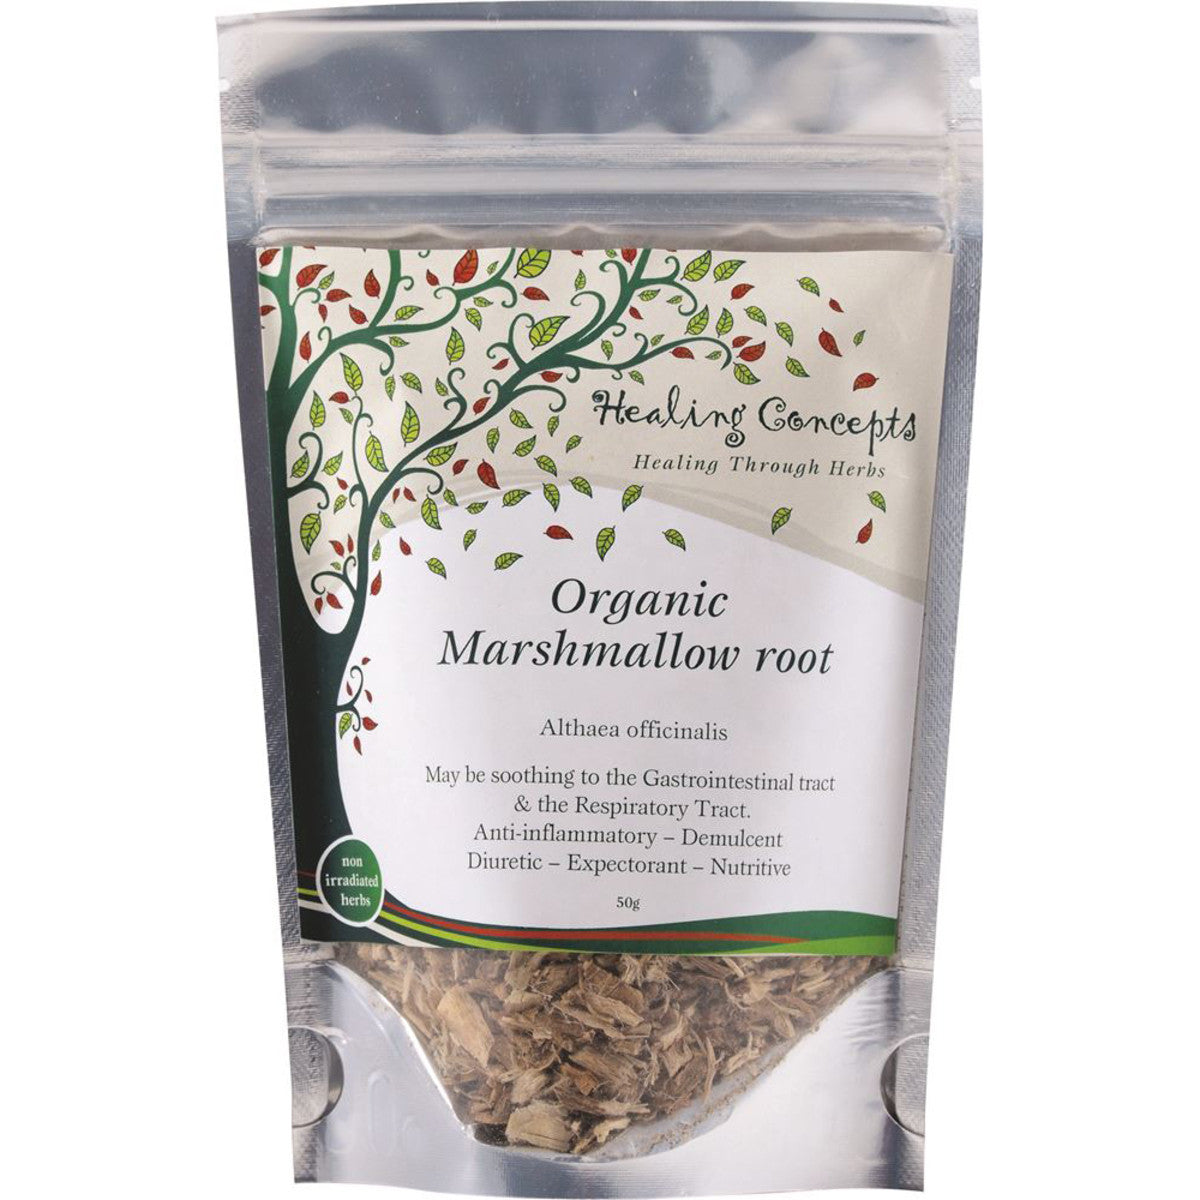 Healing Concepts Marshmallow Root Tea 50g, Certified Organic